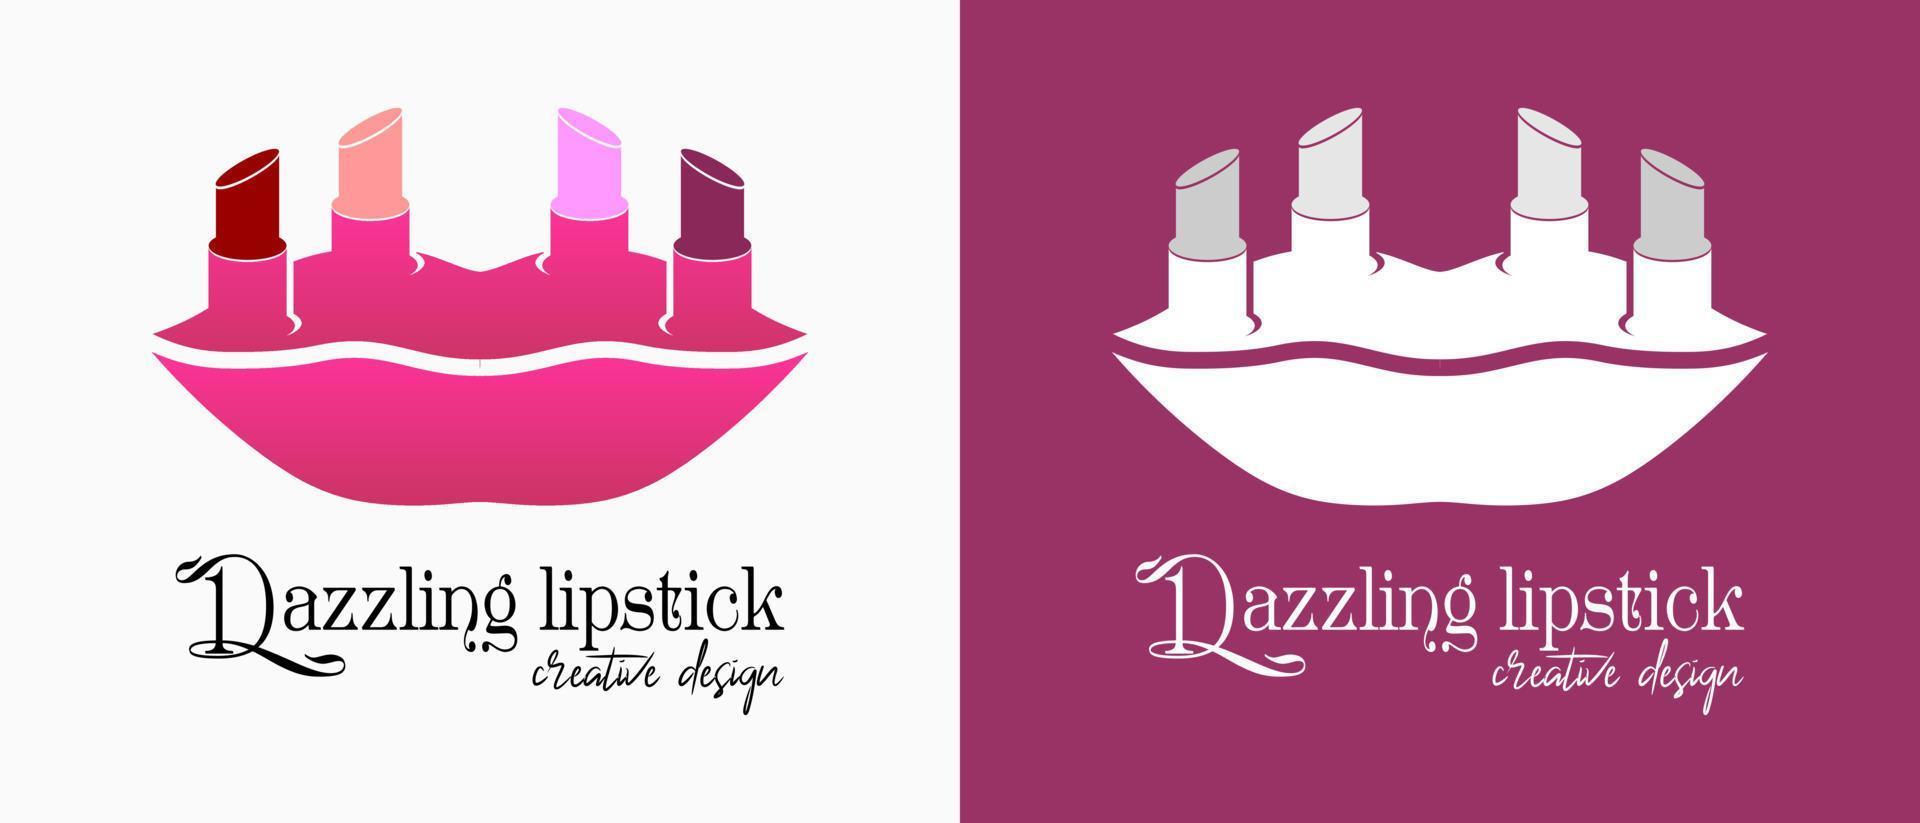 Lippenstift-Logo-Design mit Lippen-Symbol im kreativen Konzept. Premium-Vektor-Make-up oder Lifestyle-Logo-Illustration vektor